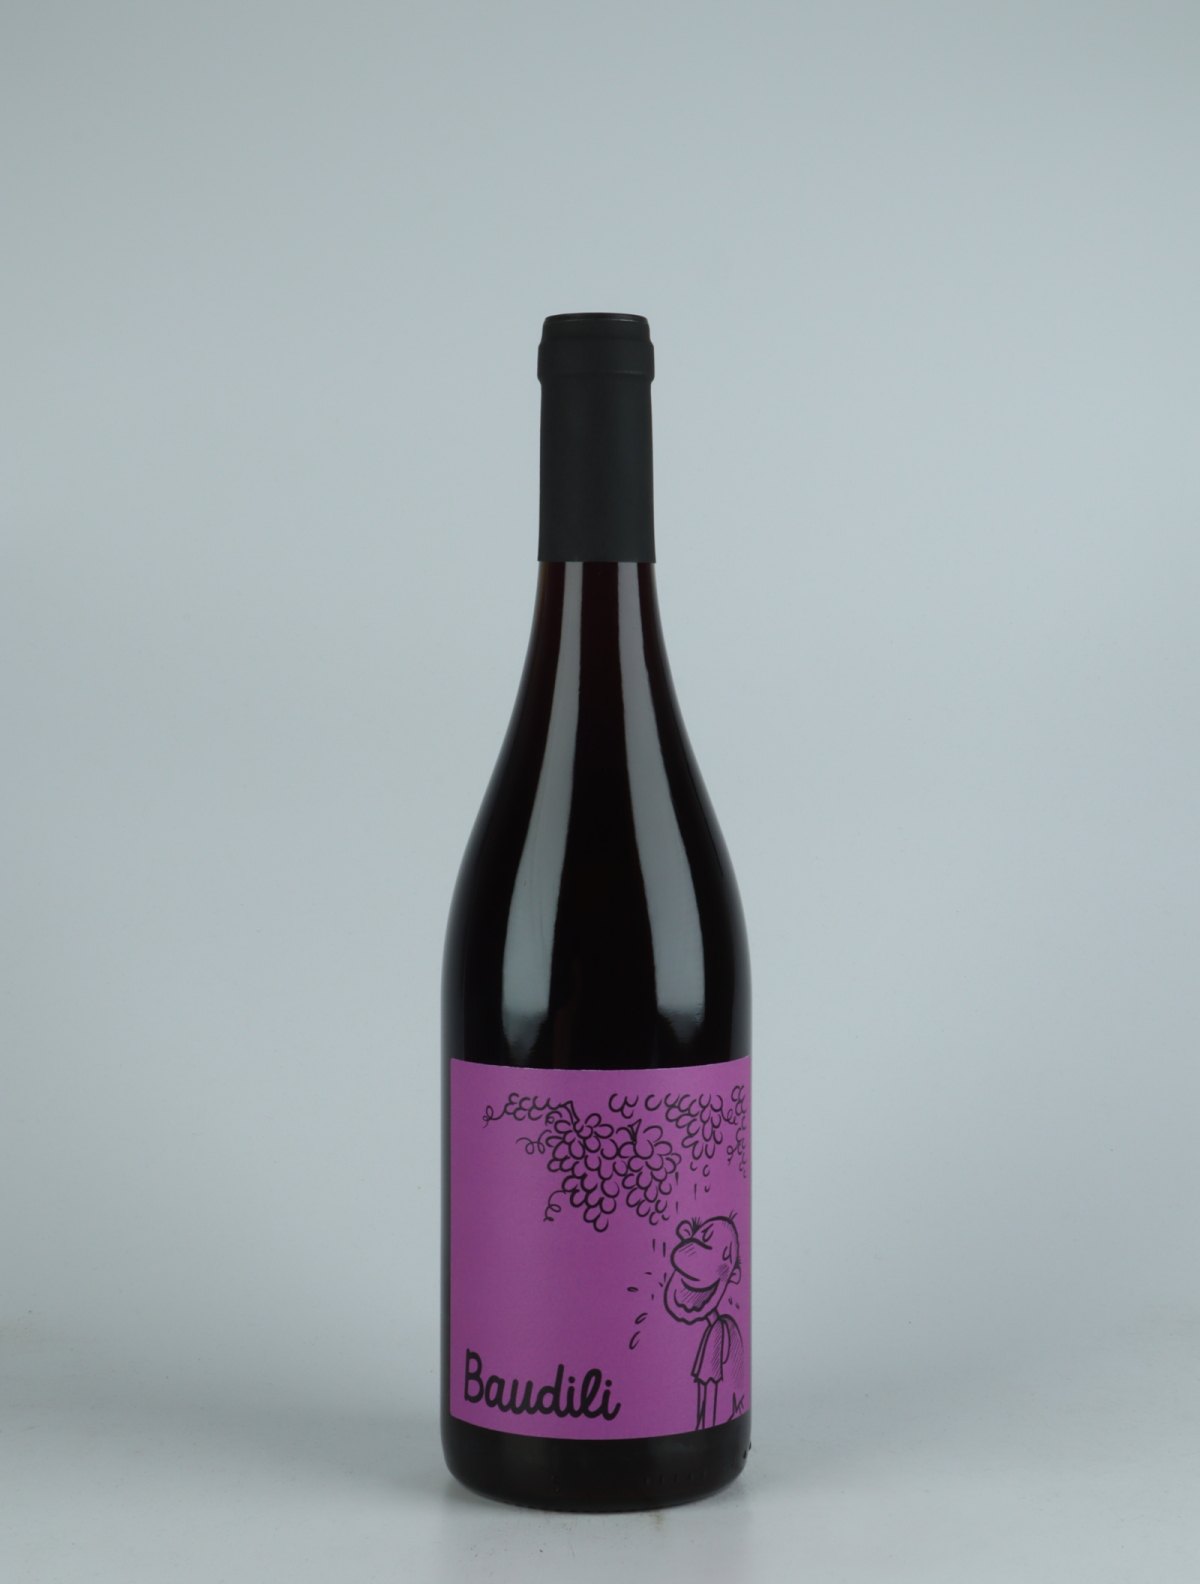 A bottle 2021 Baudili Negre Red wine from Mas Candí, Penedès in Spain